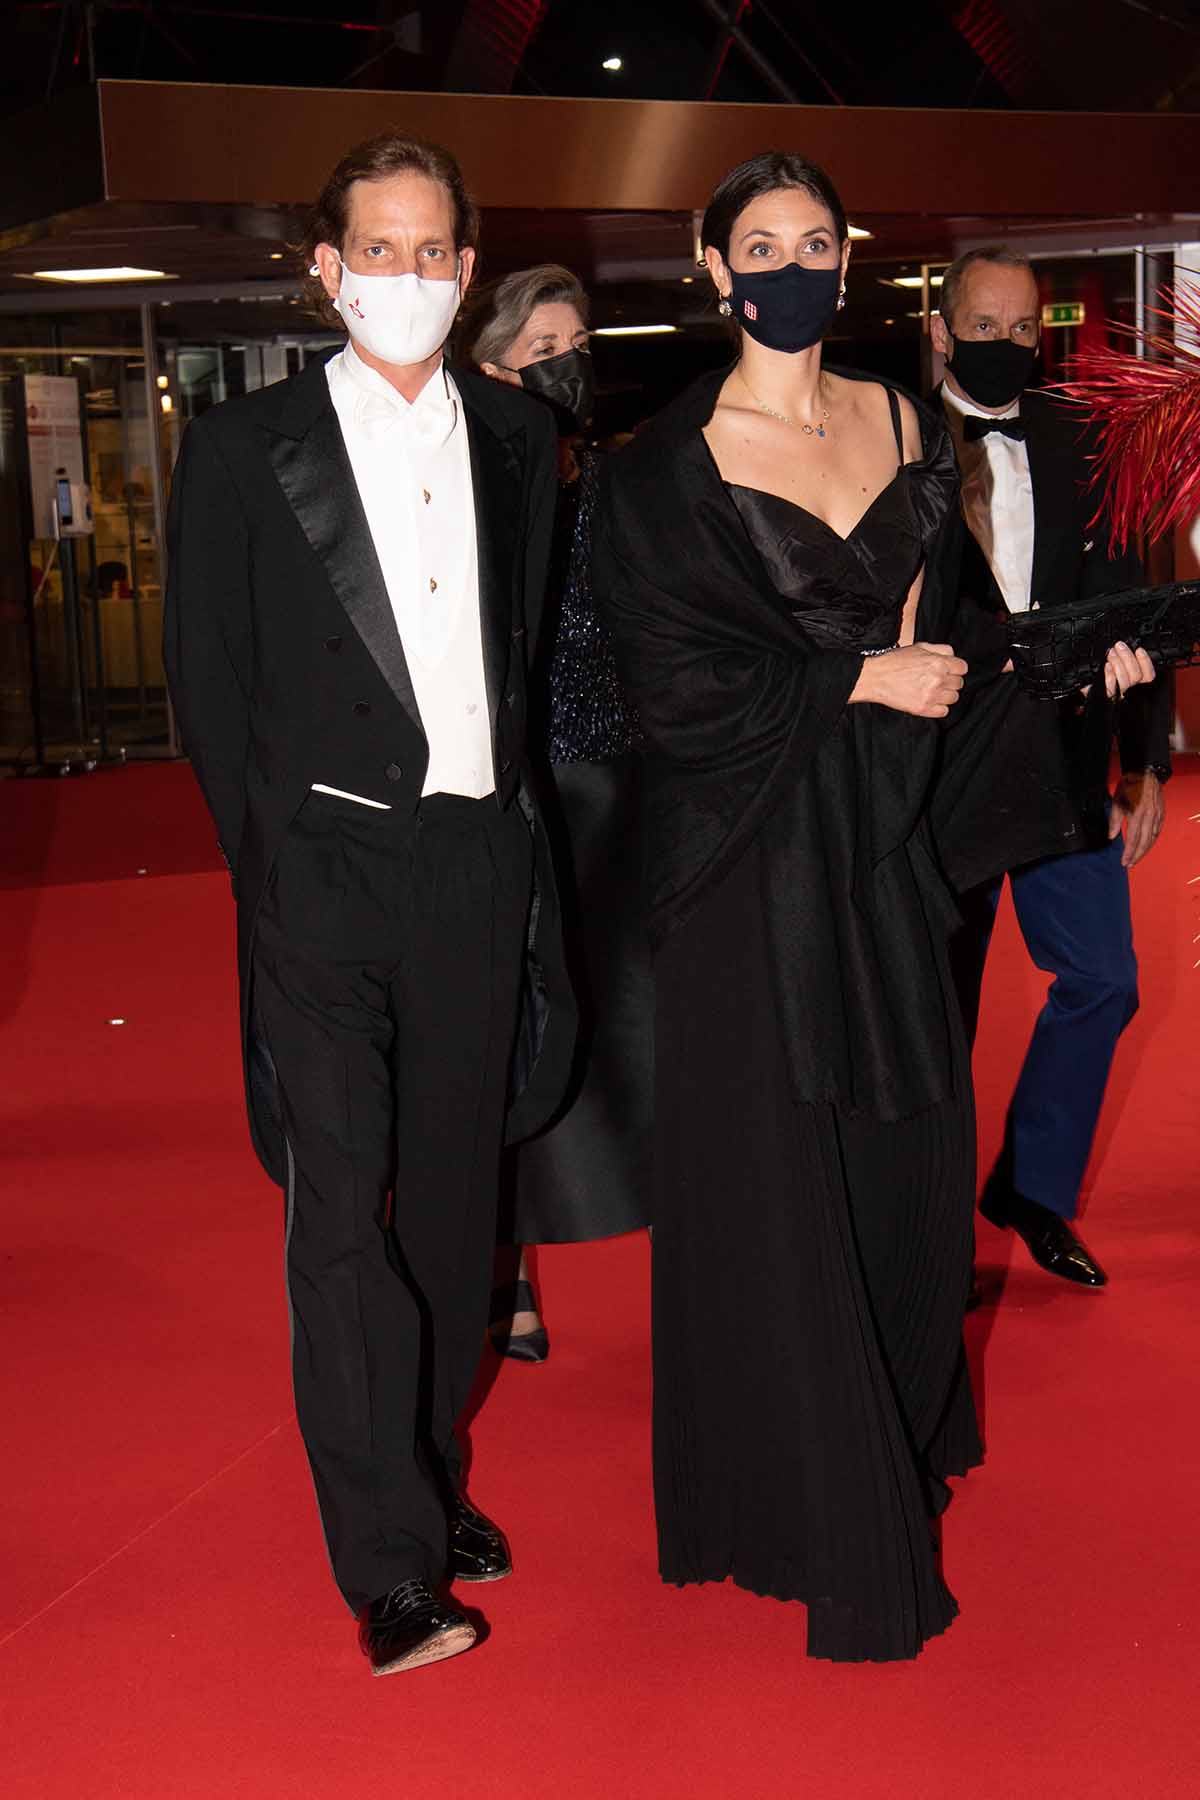 Andrea Casiraghi and Tatiana Santo Domingo attend the gala at the Forum Grimaldi during the Monaco National Day Celebrations in Monaco, on November 19, 2021 in Monaco, France.